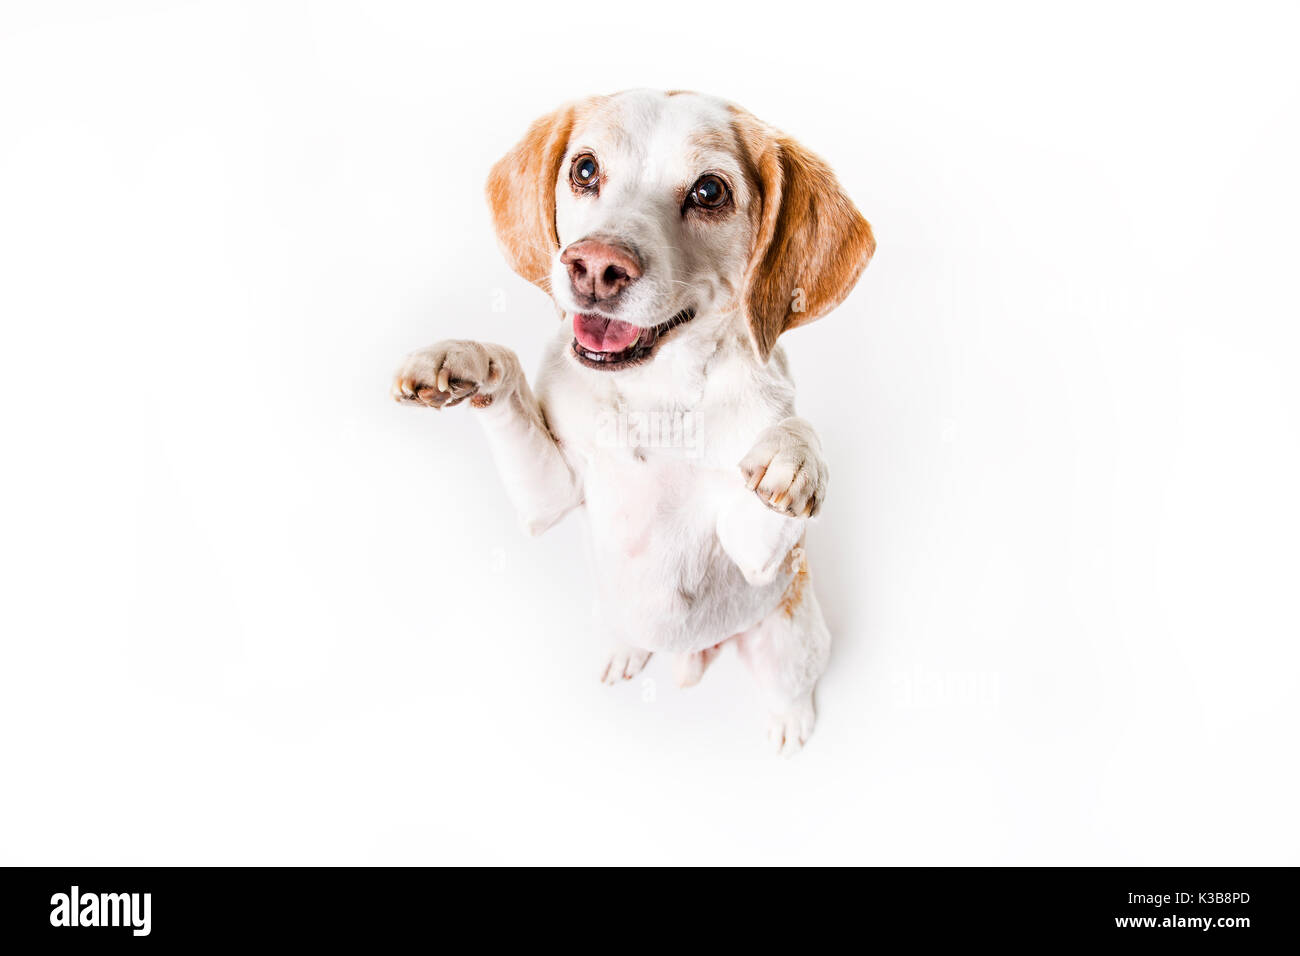 puppy Beagle on white background Stock Photo